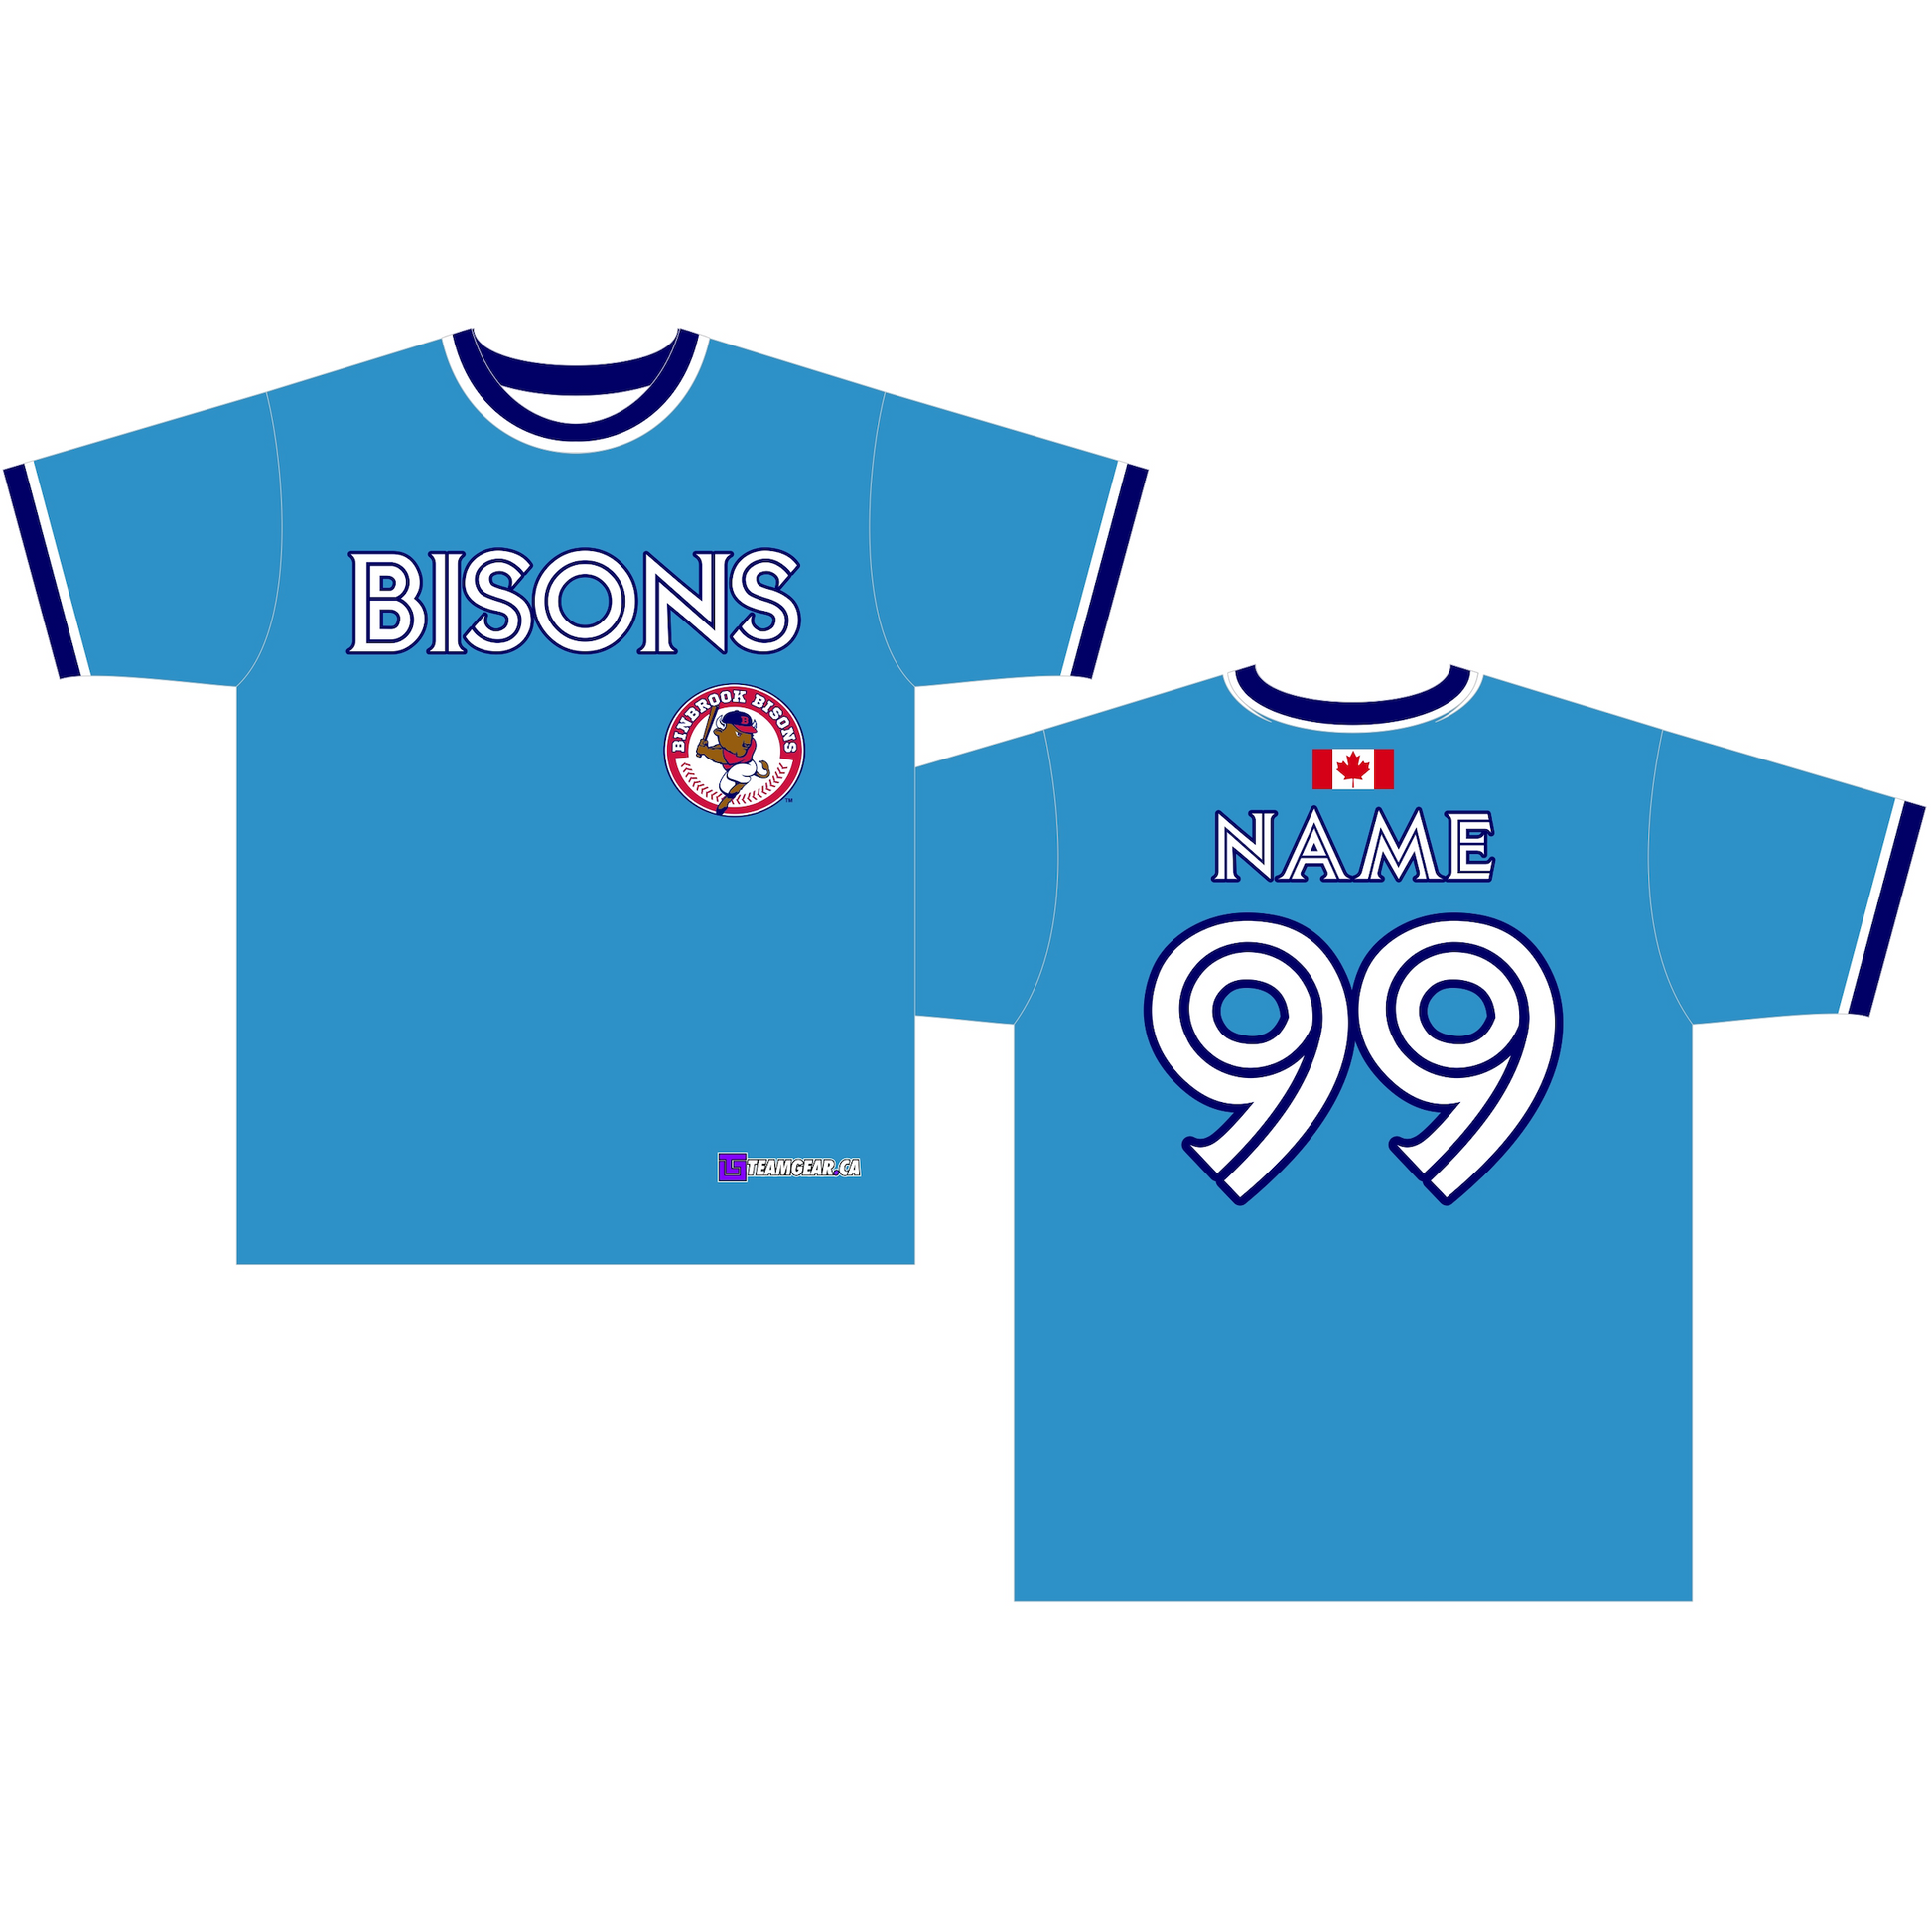 Custom Baseball Jersey crew neck for Bisons